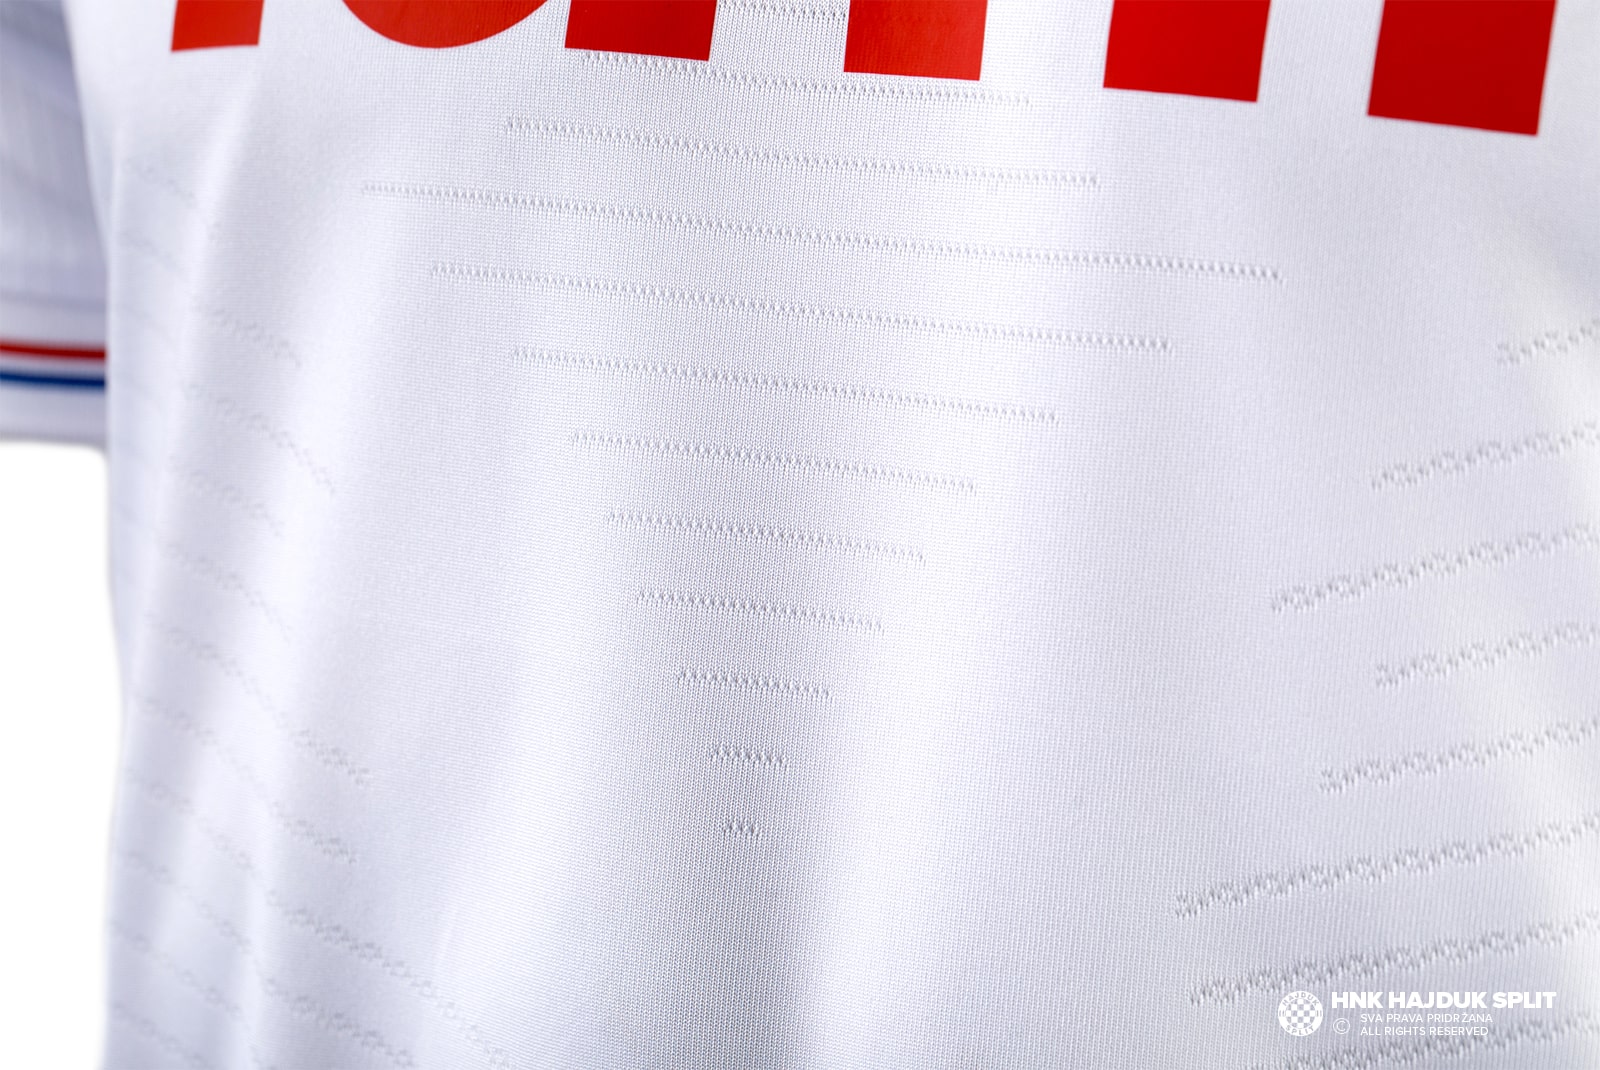 Hajduk Split, Club jersey shirt,Free shipping to USA and Europe